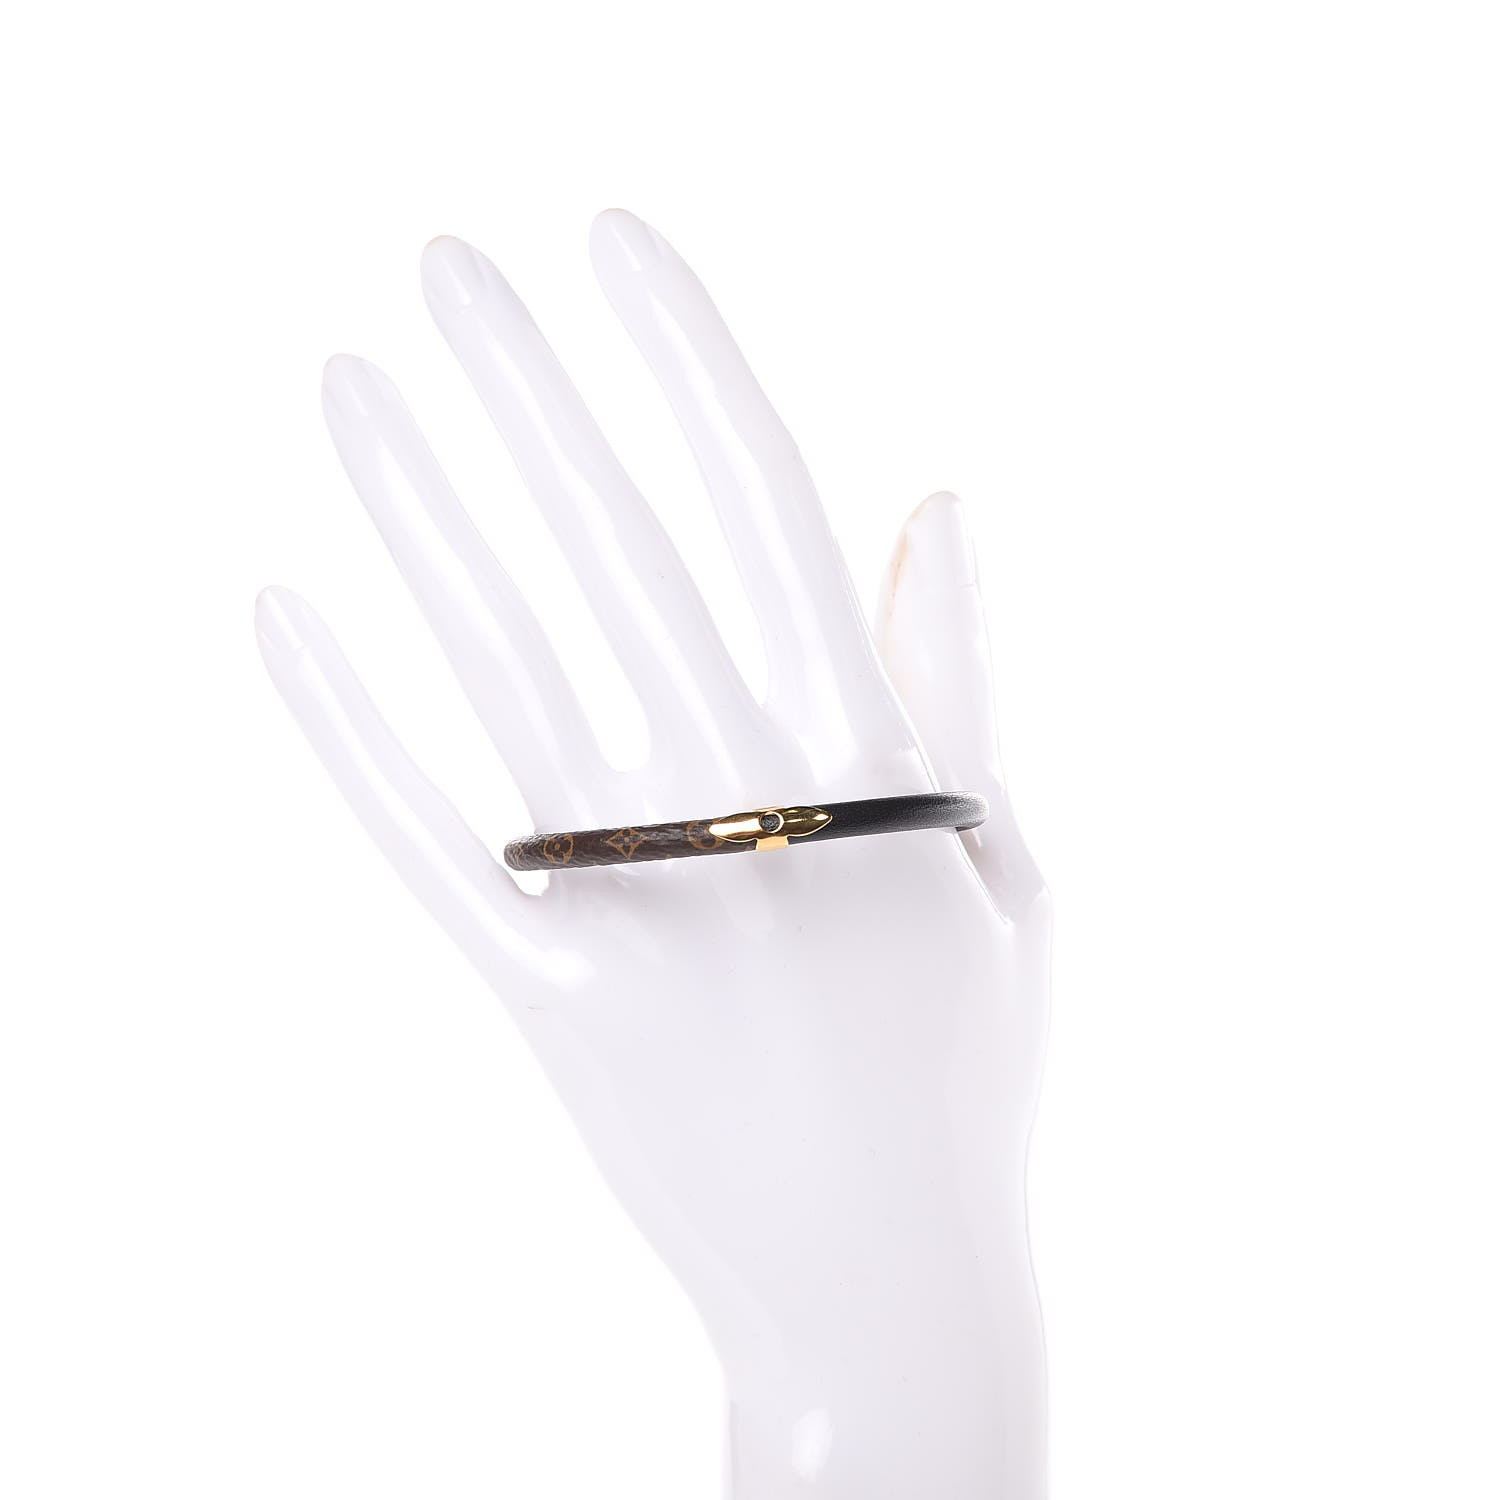 Louis Vuitton Daily Confidential Bracelet Monogram/Calfskin Brown